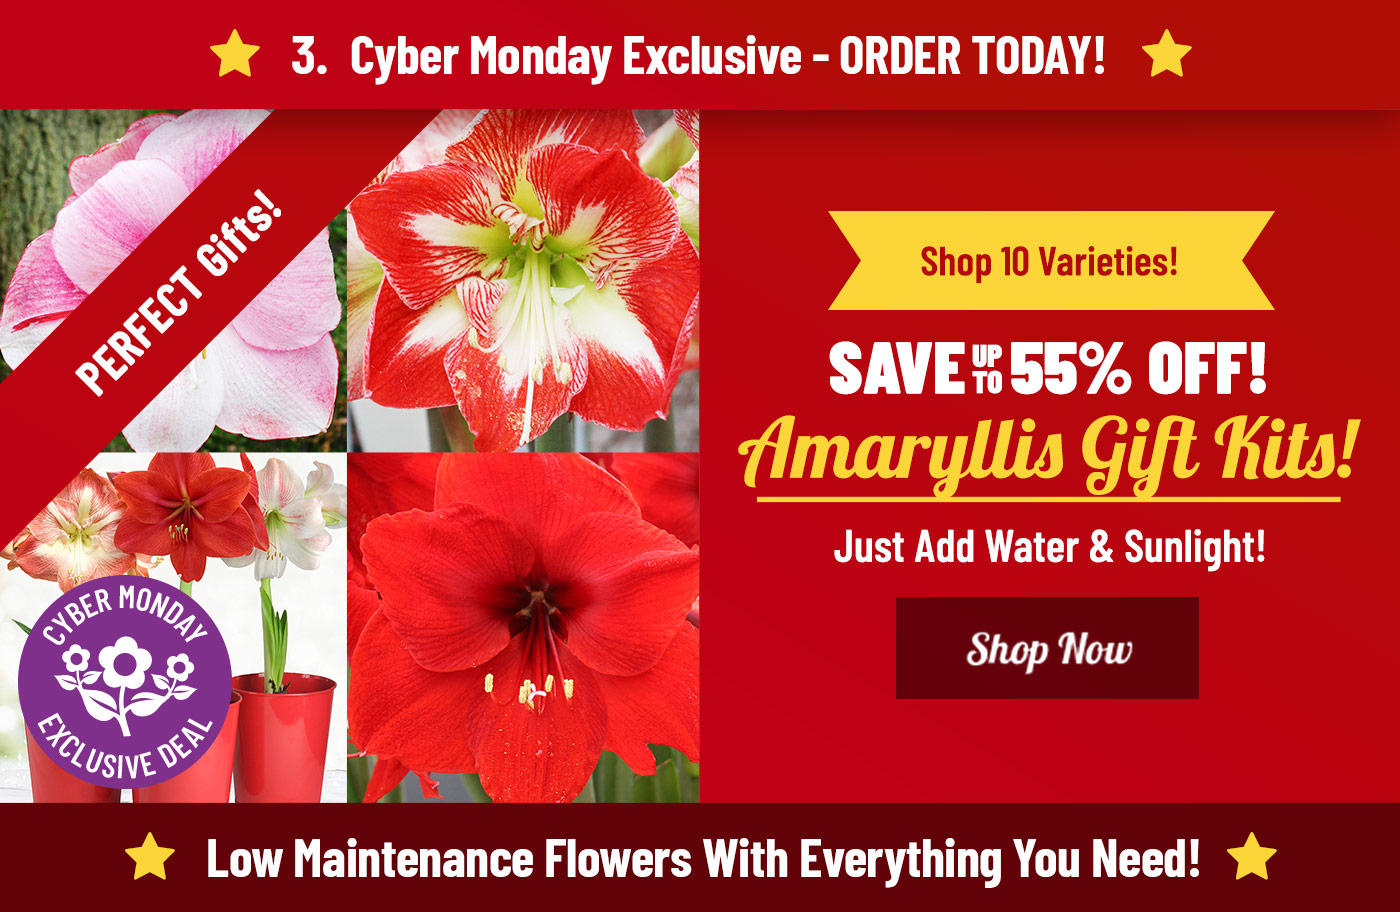 Up To 55% OFF Amaryllis Gift Kits!